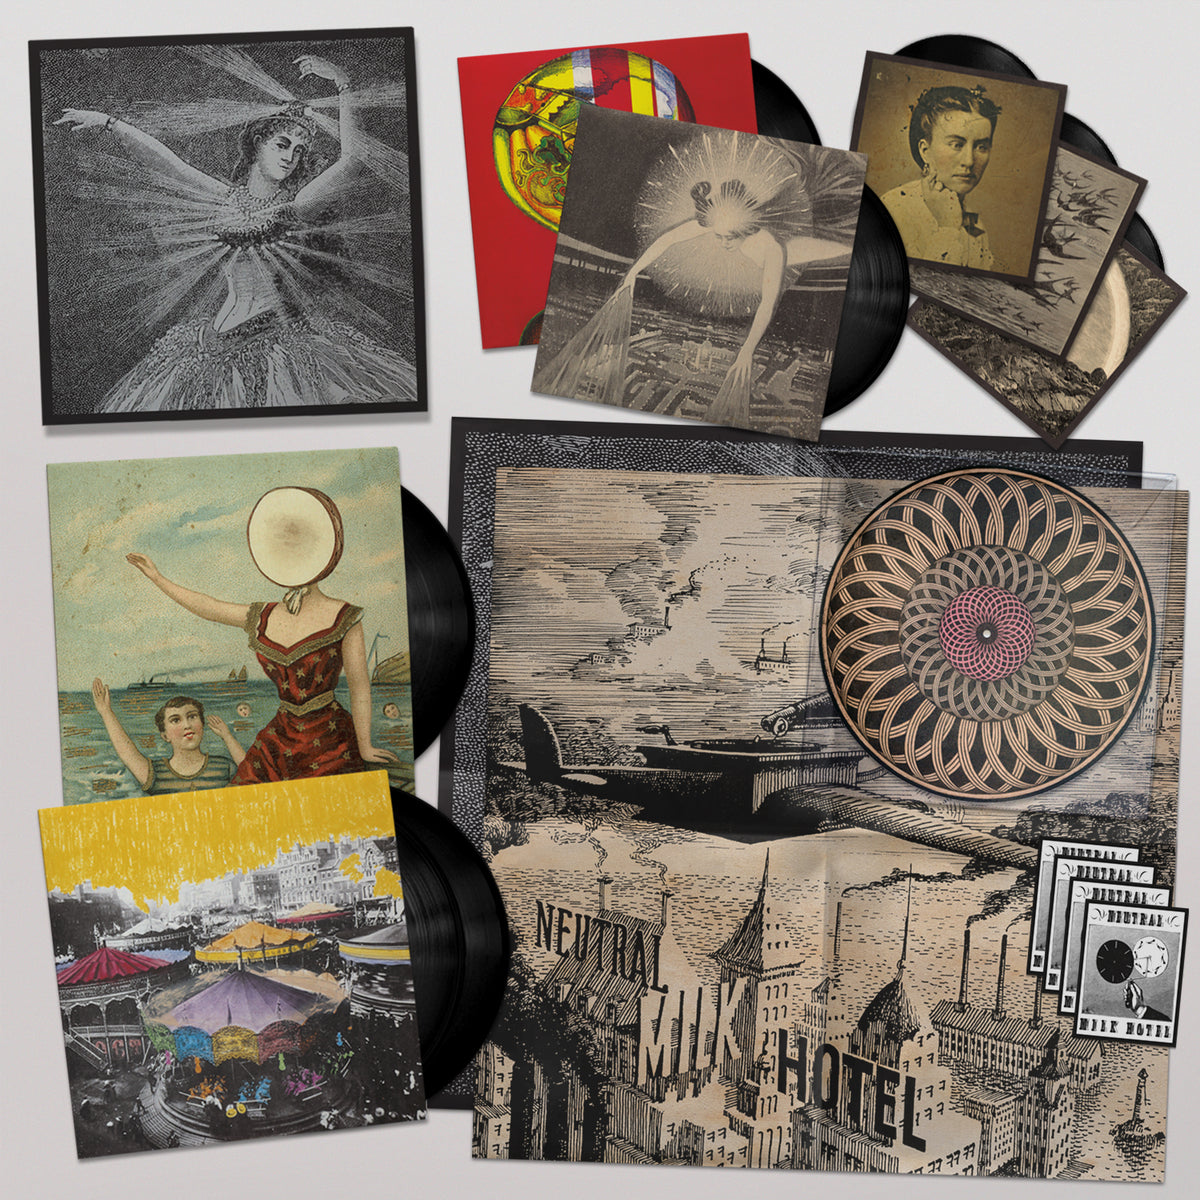 Neutral Milk Hotel: The Collected Works (9 LP Vinyl Box Set)